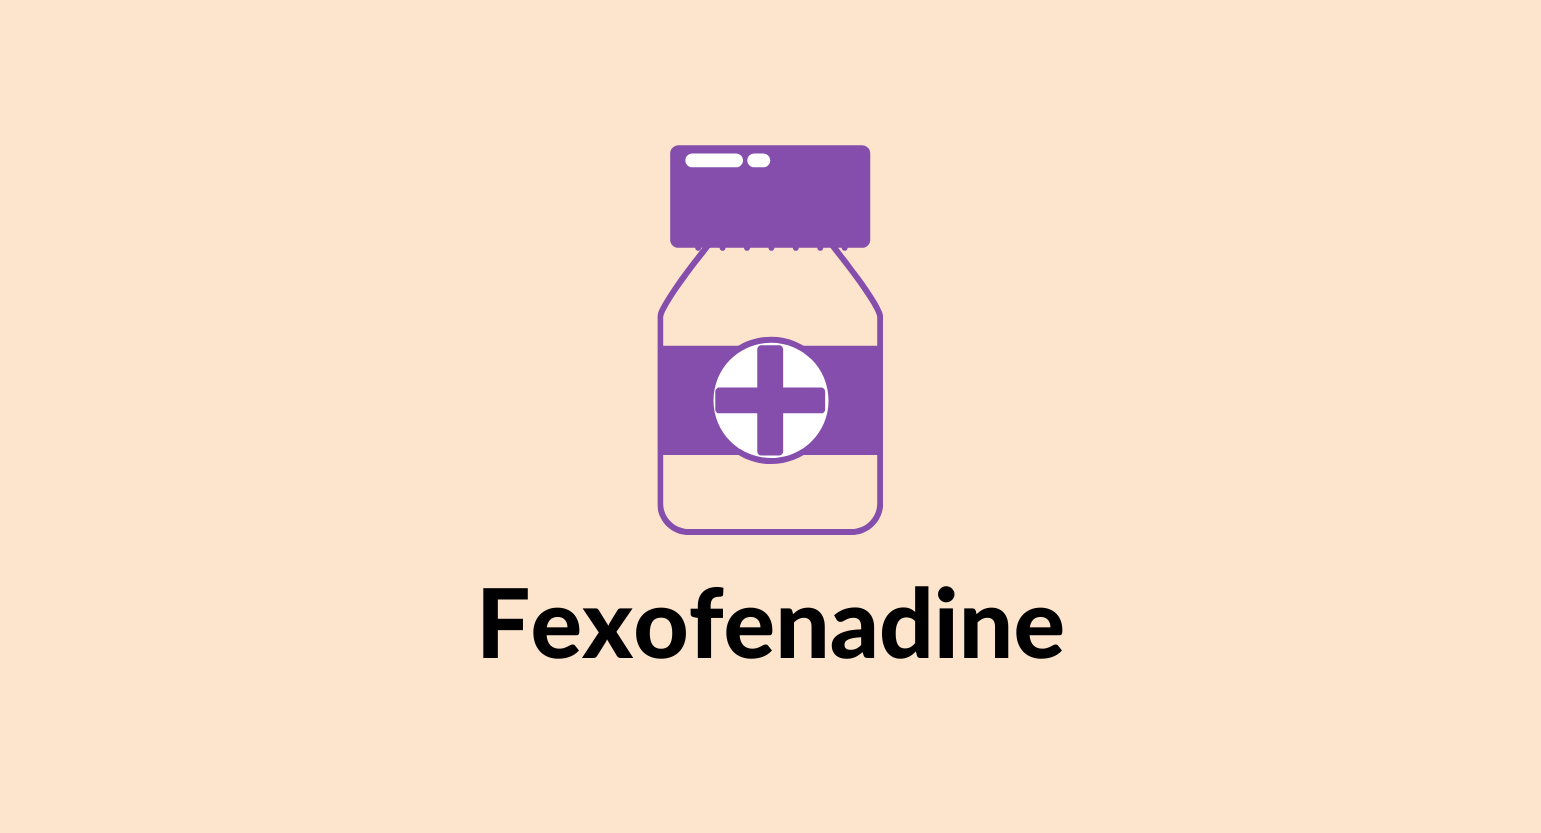 Illustration of a fexofenadine pack.